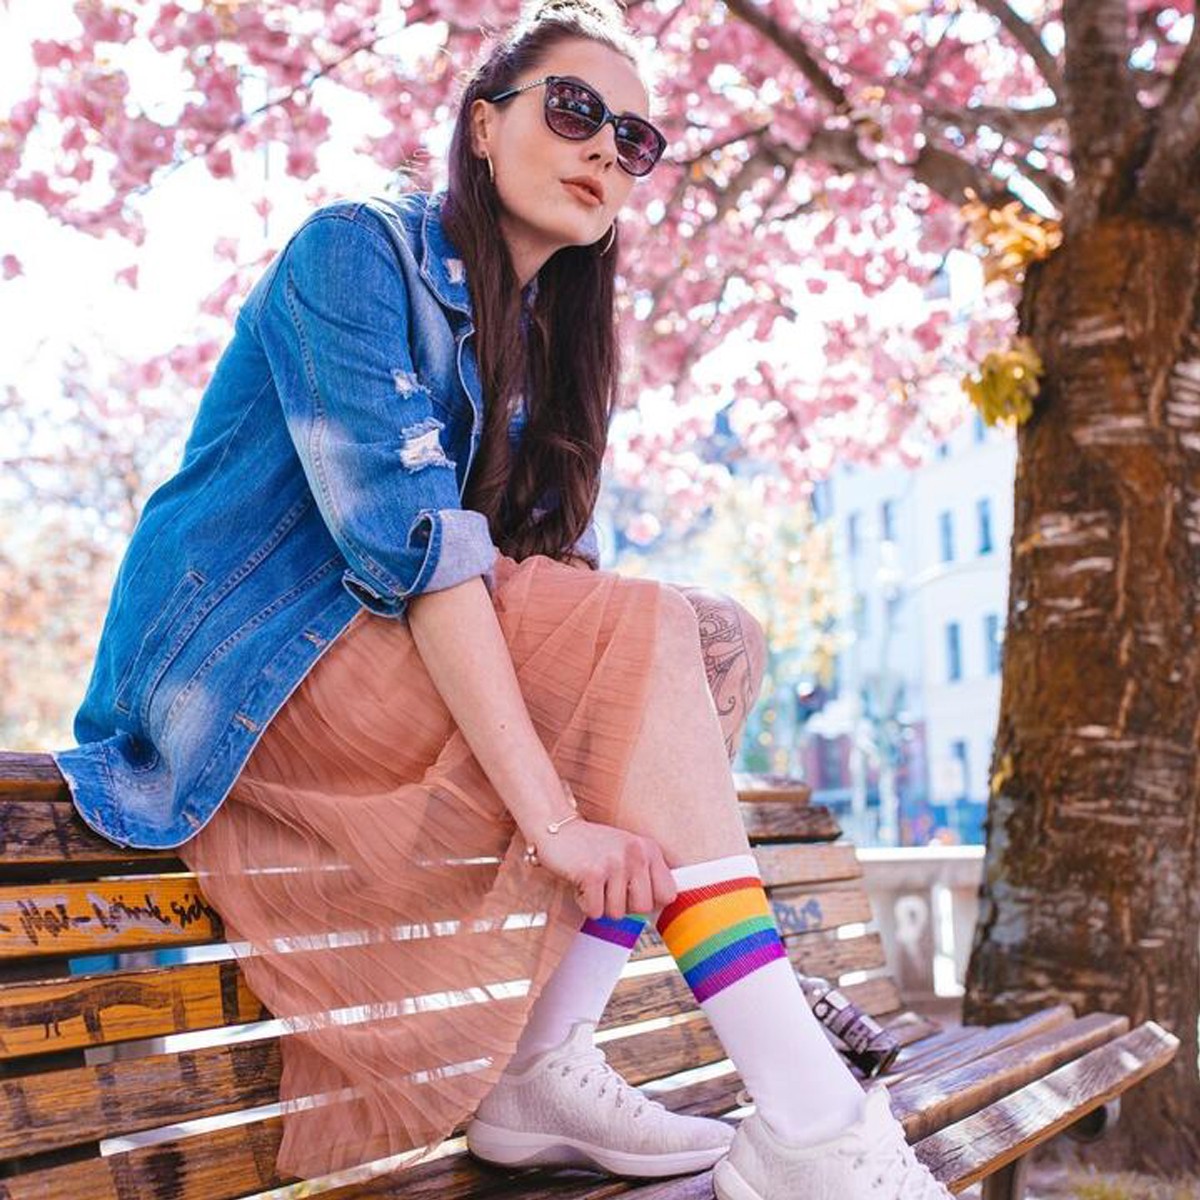 American Socks Rainbow Pride Mid High Çorap AS015